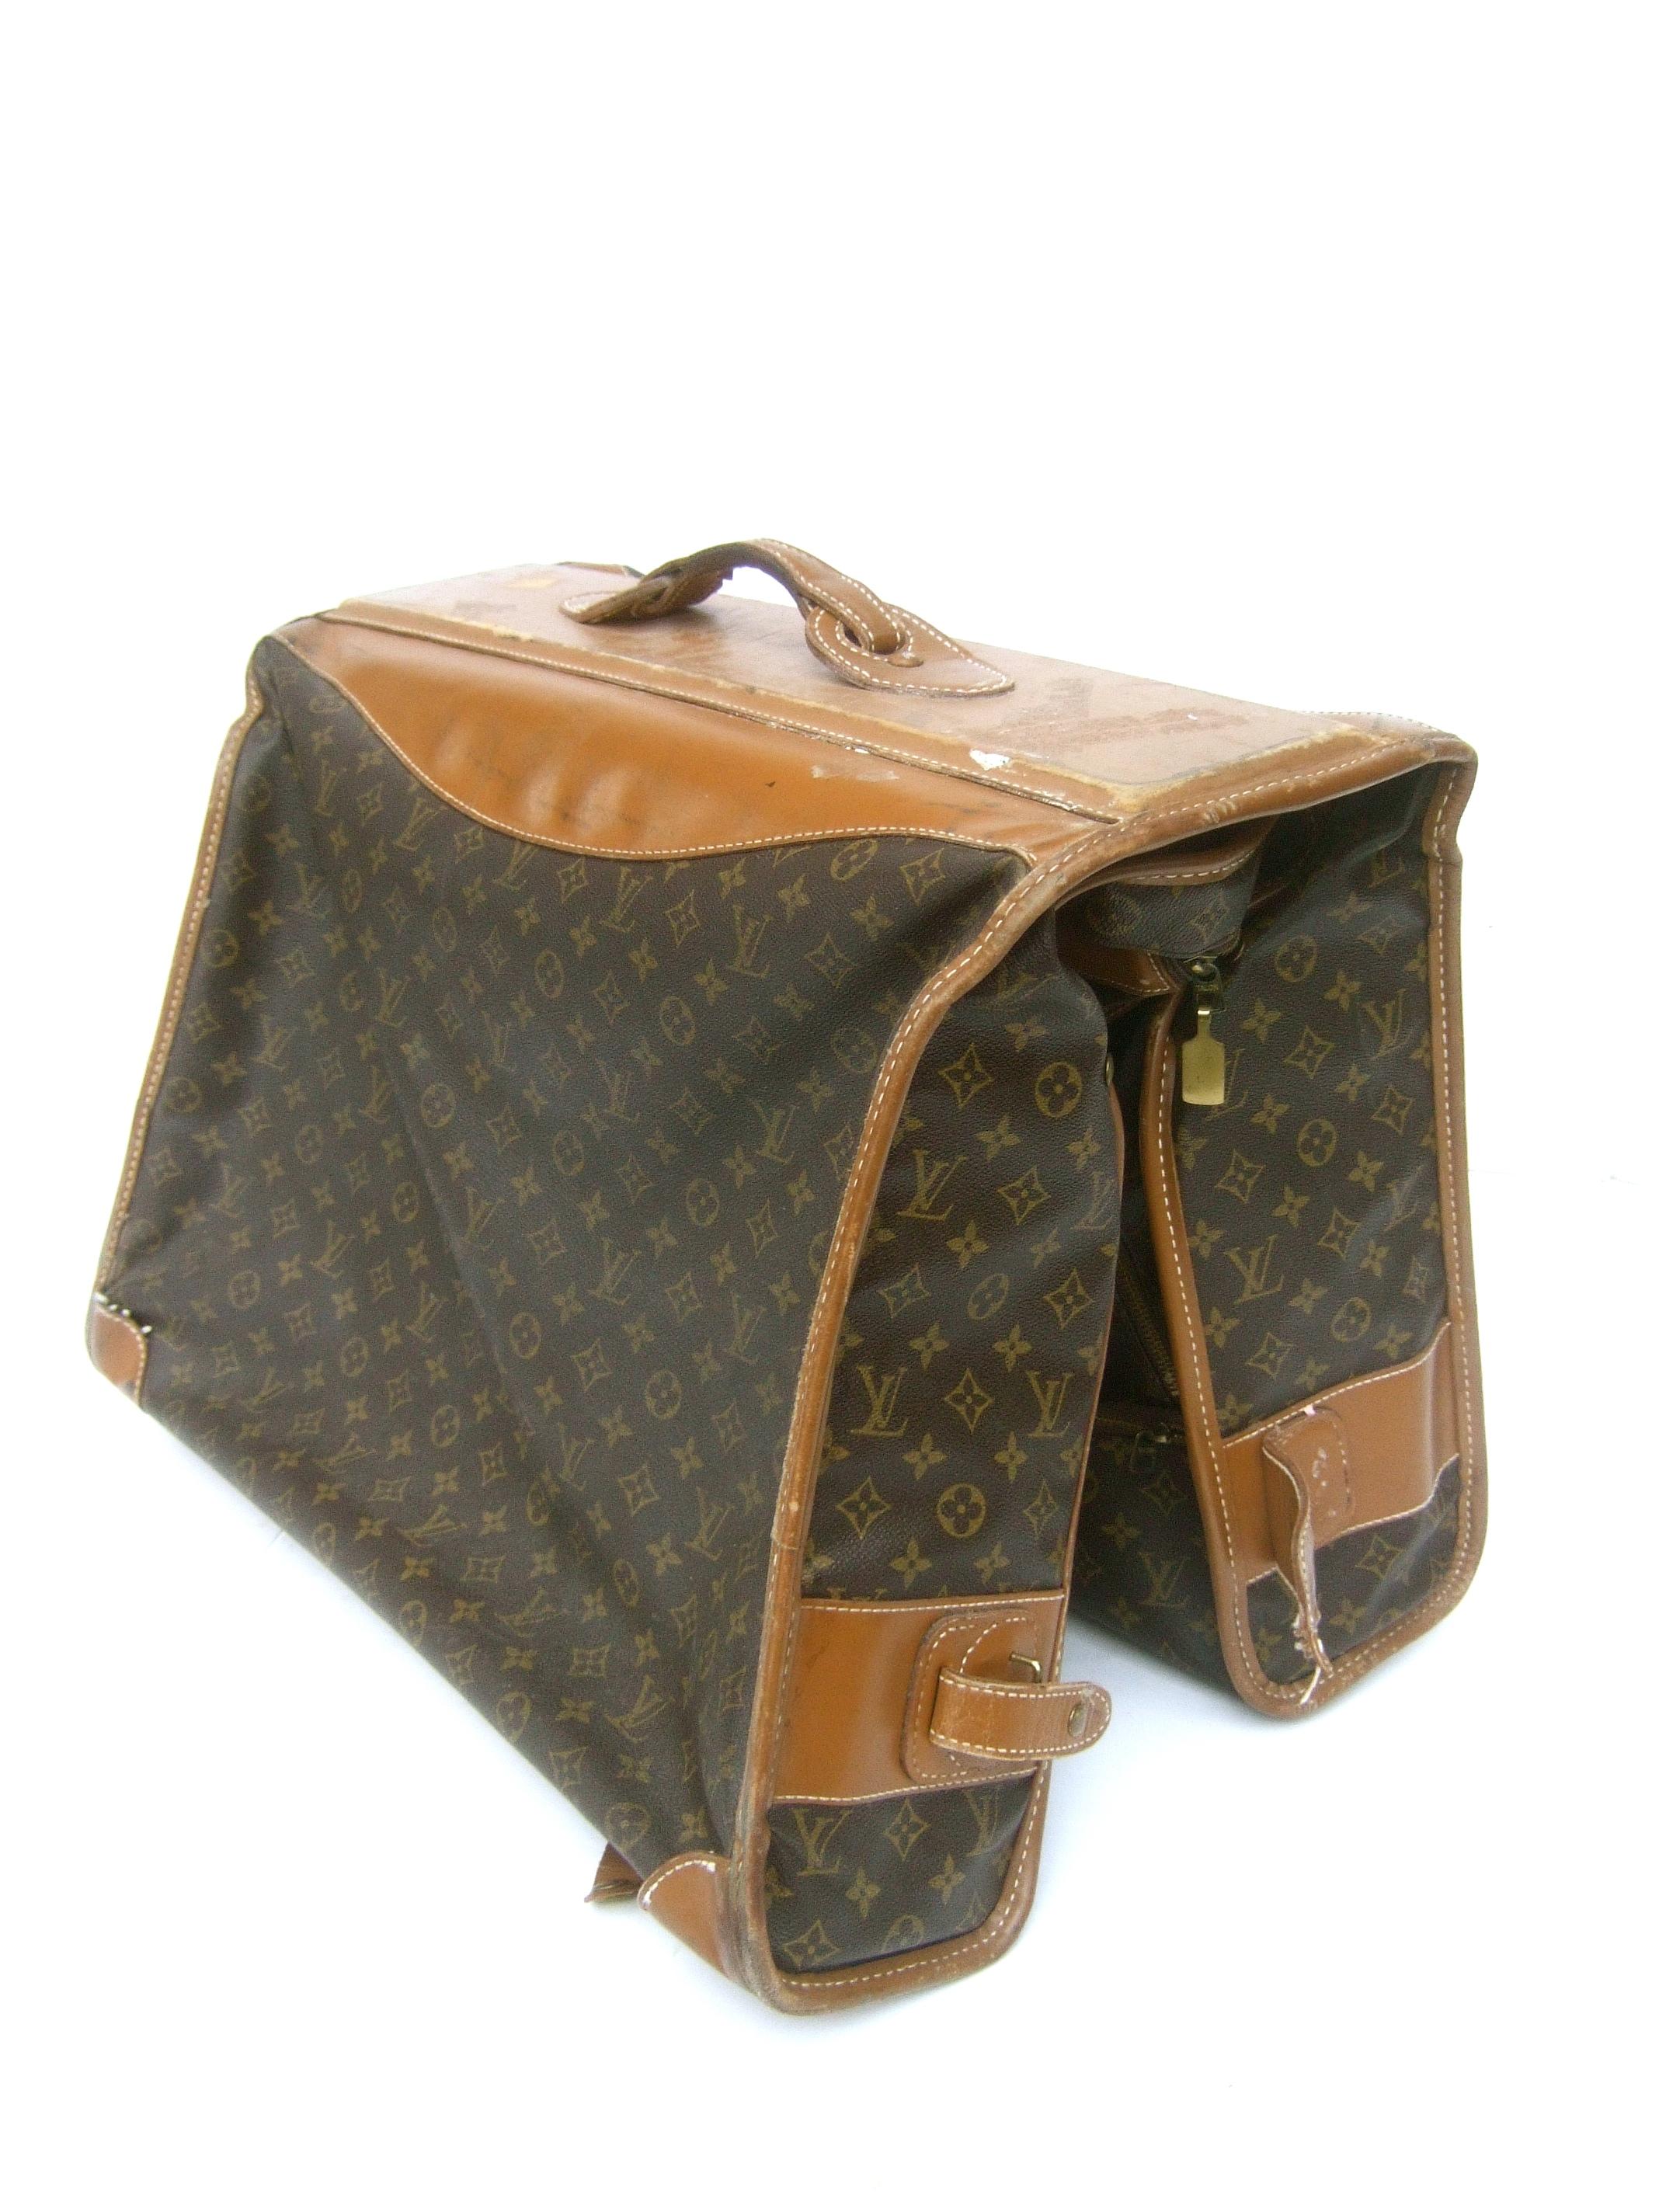 Louis Vuitton Vintage garment bag travel luggage 